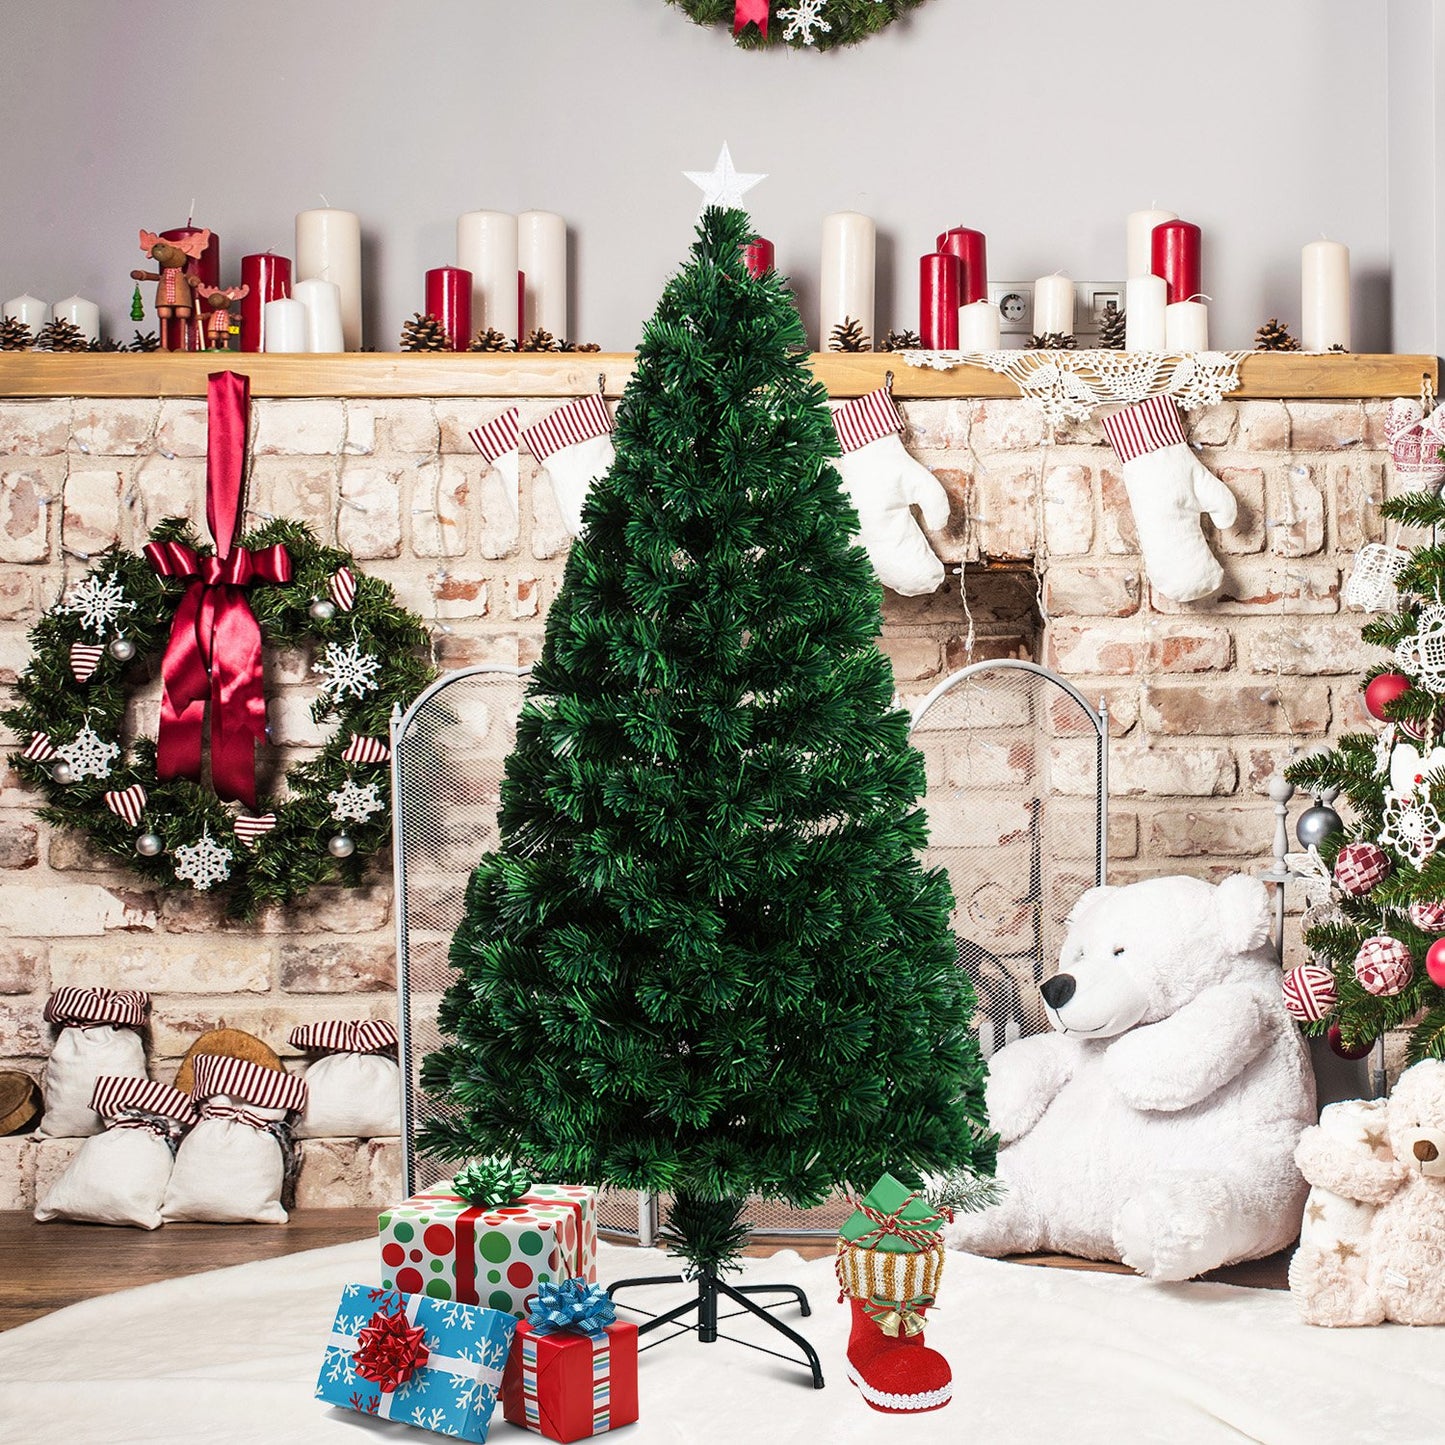 HOMCOM 1.5m Pre-Lit Artificial Christmas Tree, Metal Stand-Green